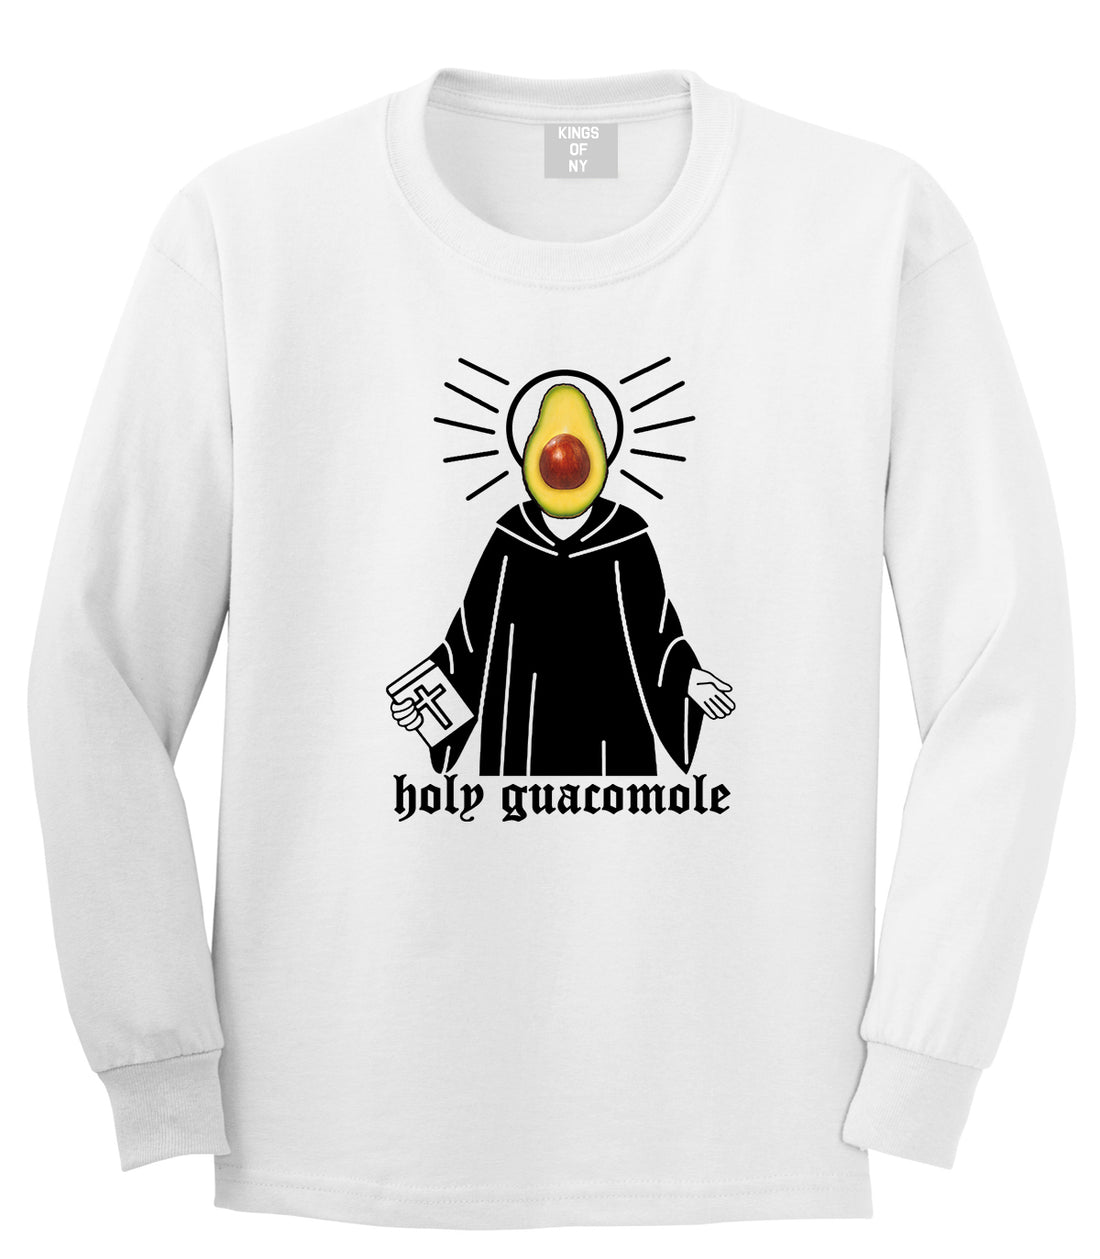 Holy Guacamole Funny Mens Long Sleeve T-Shirt White